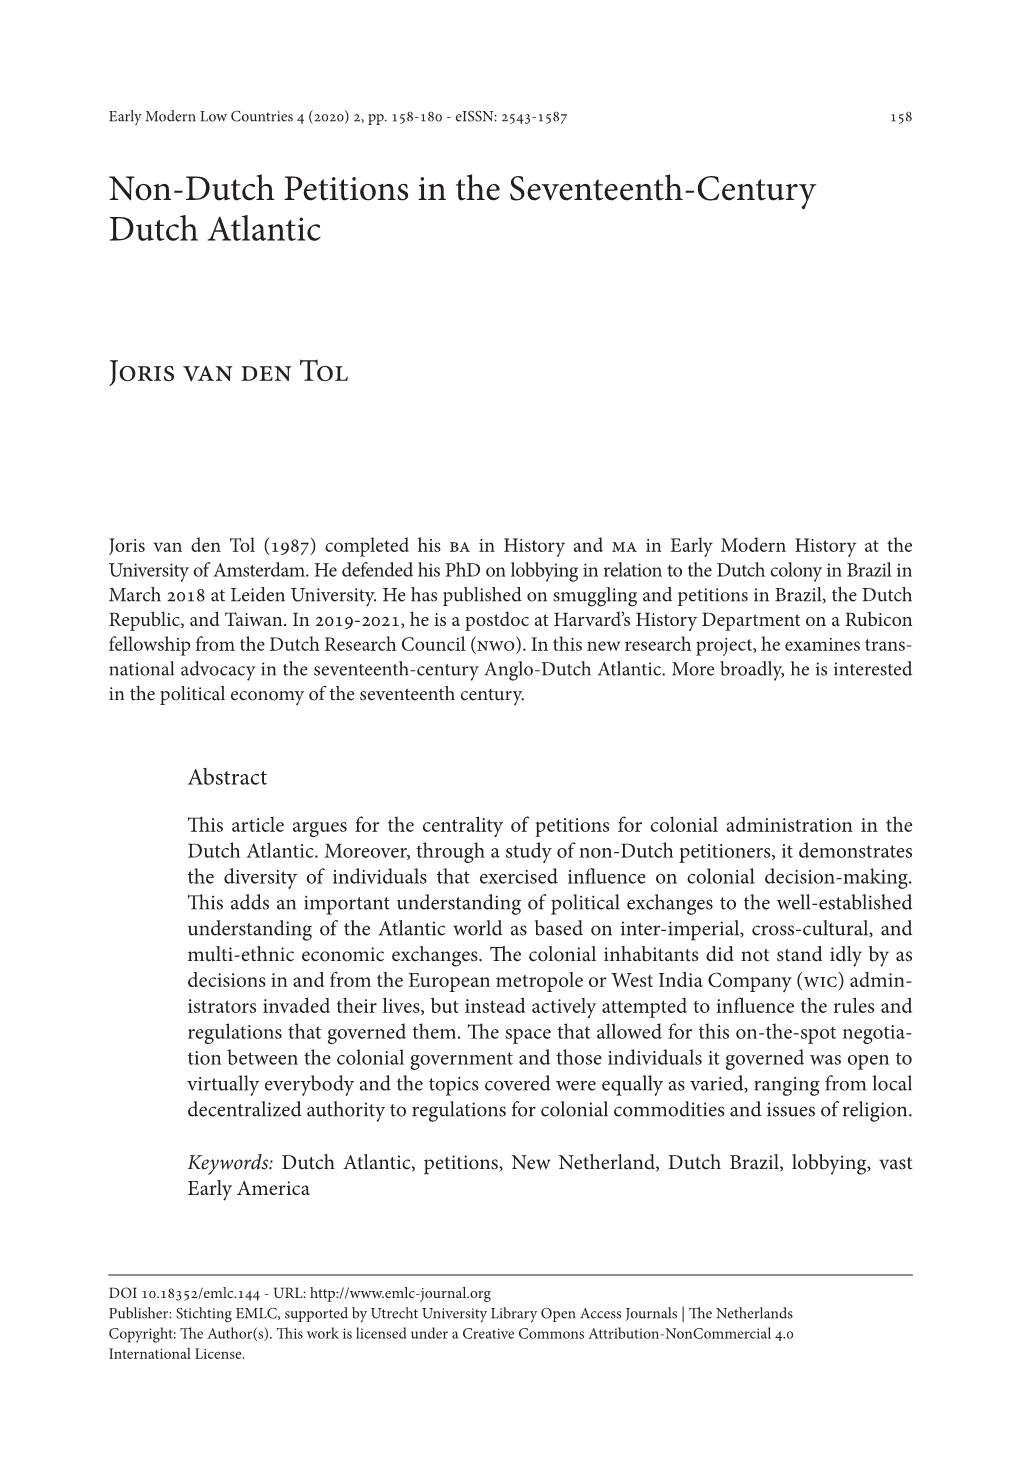 Non-Dutch Petitions in the Seventeenth-Century Dutch Atlantic